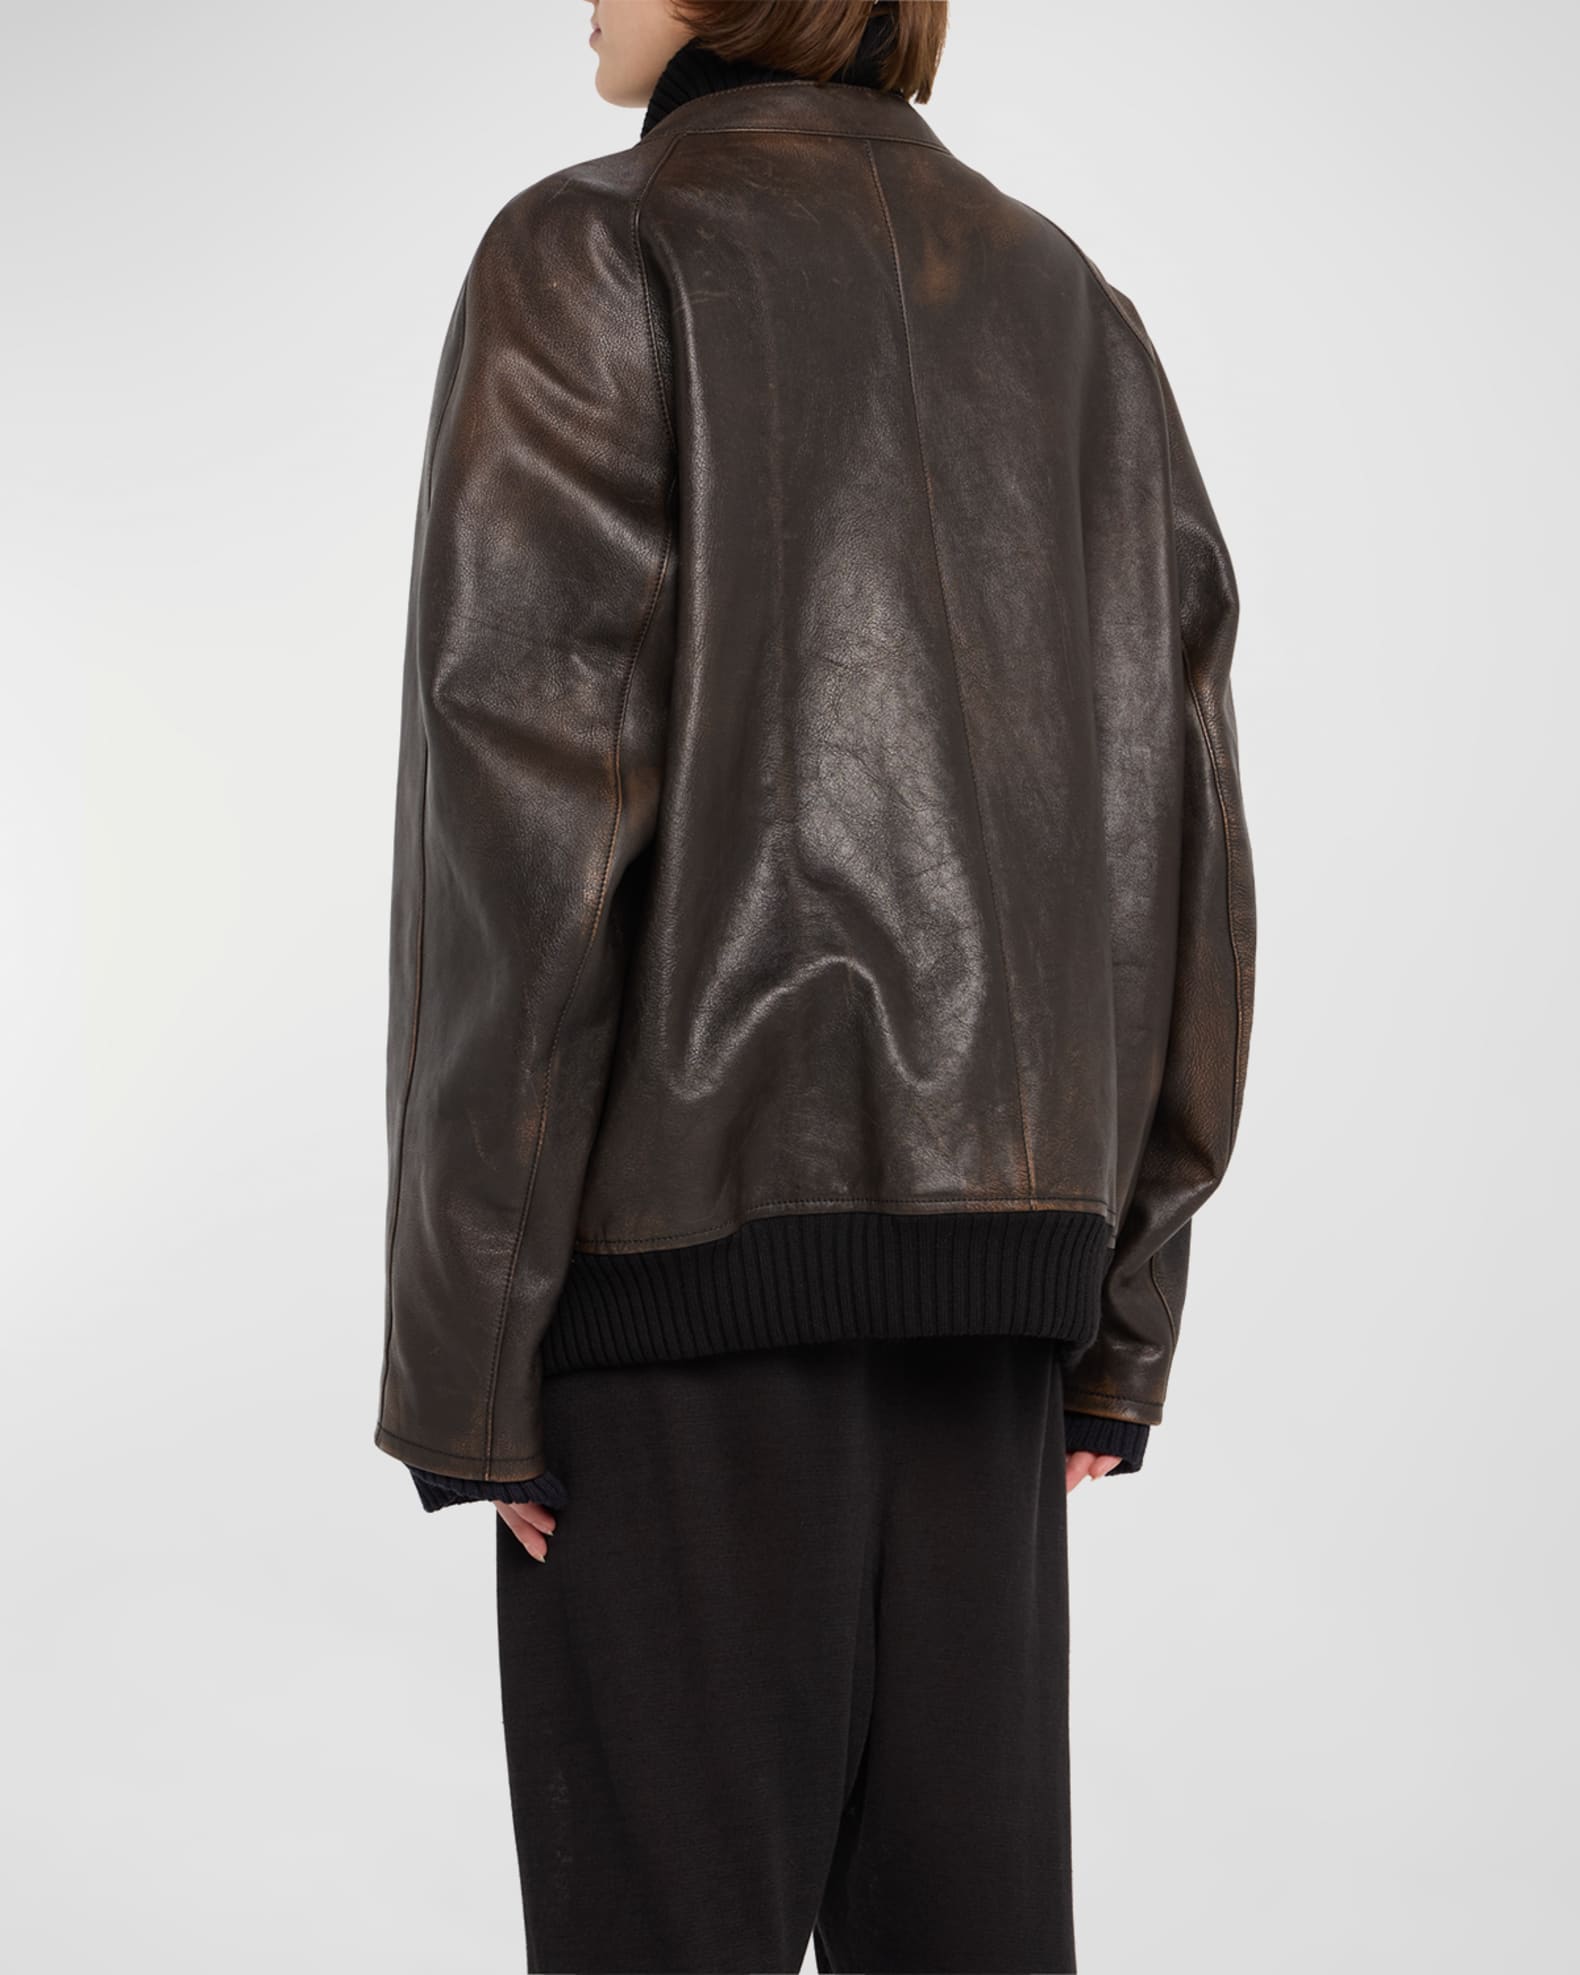 Louis Vuitton black Embellished Leather Bomber Jacket